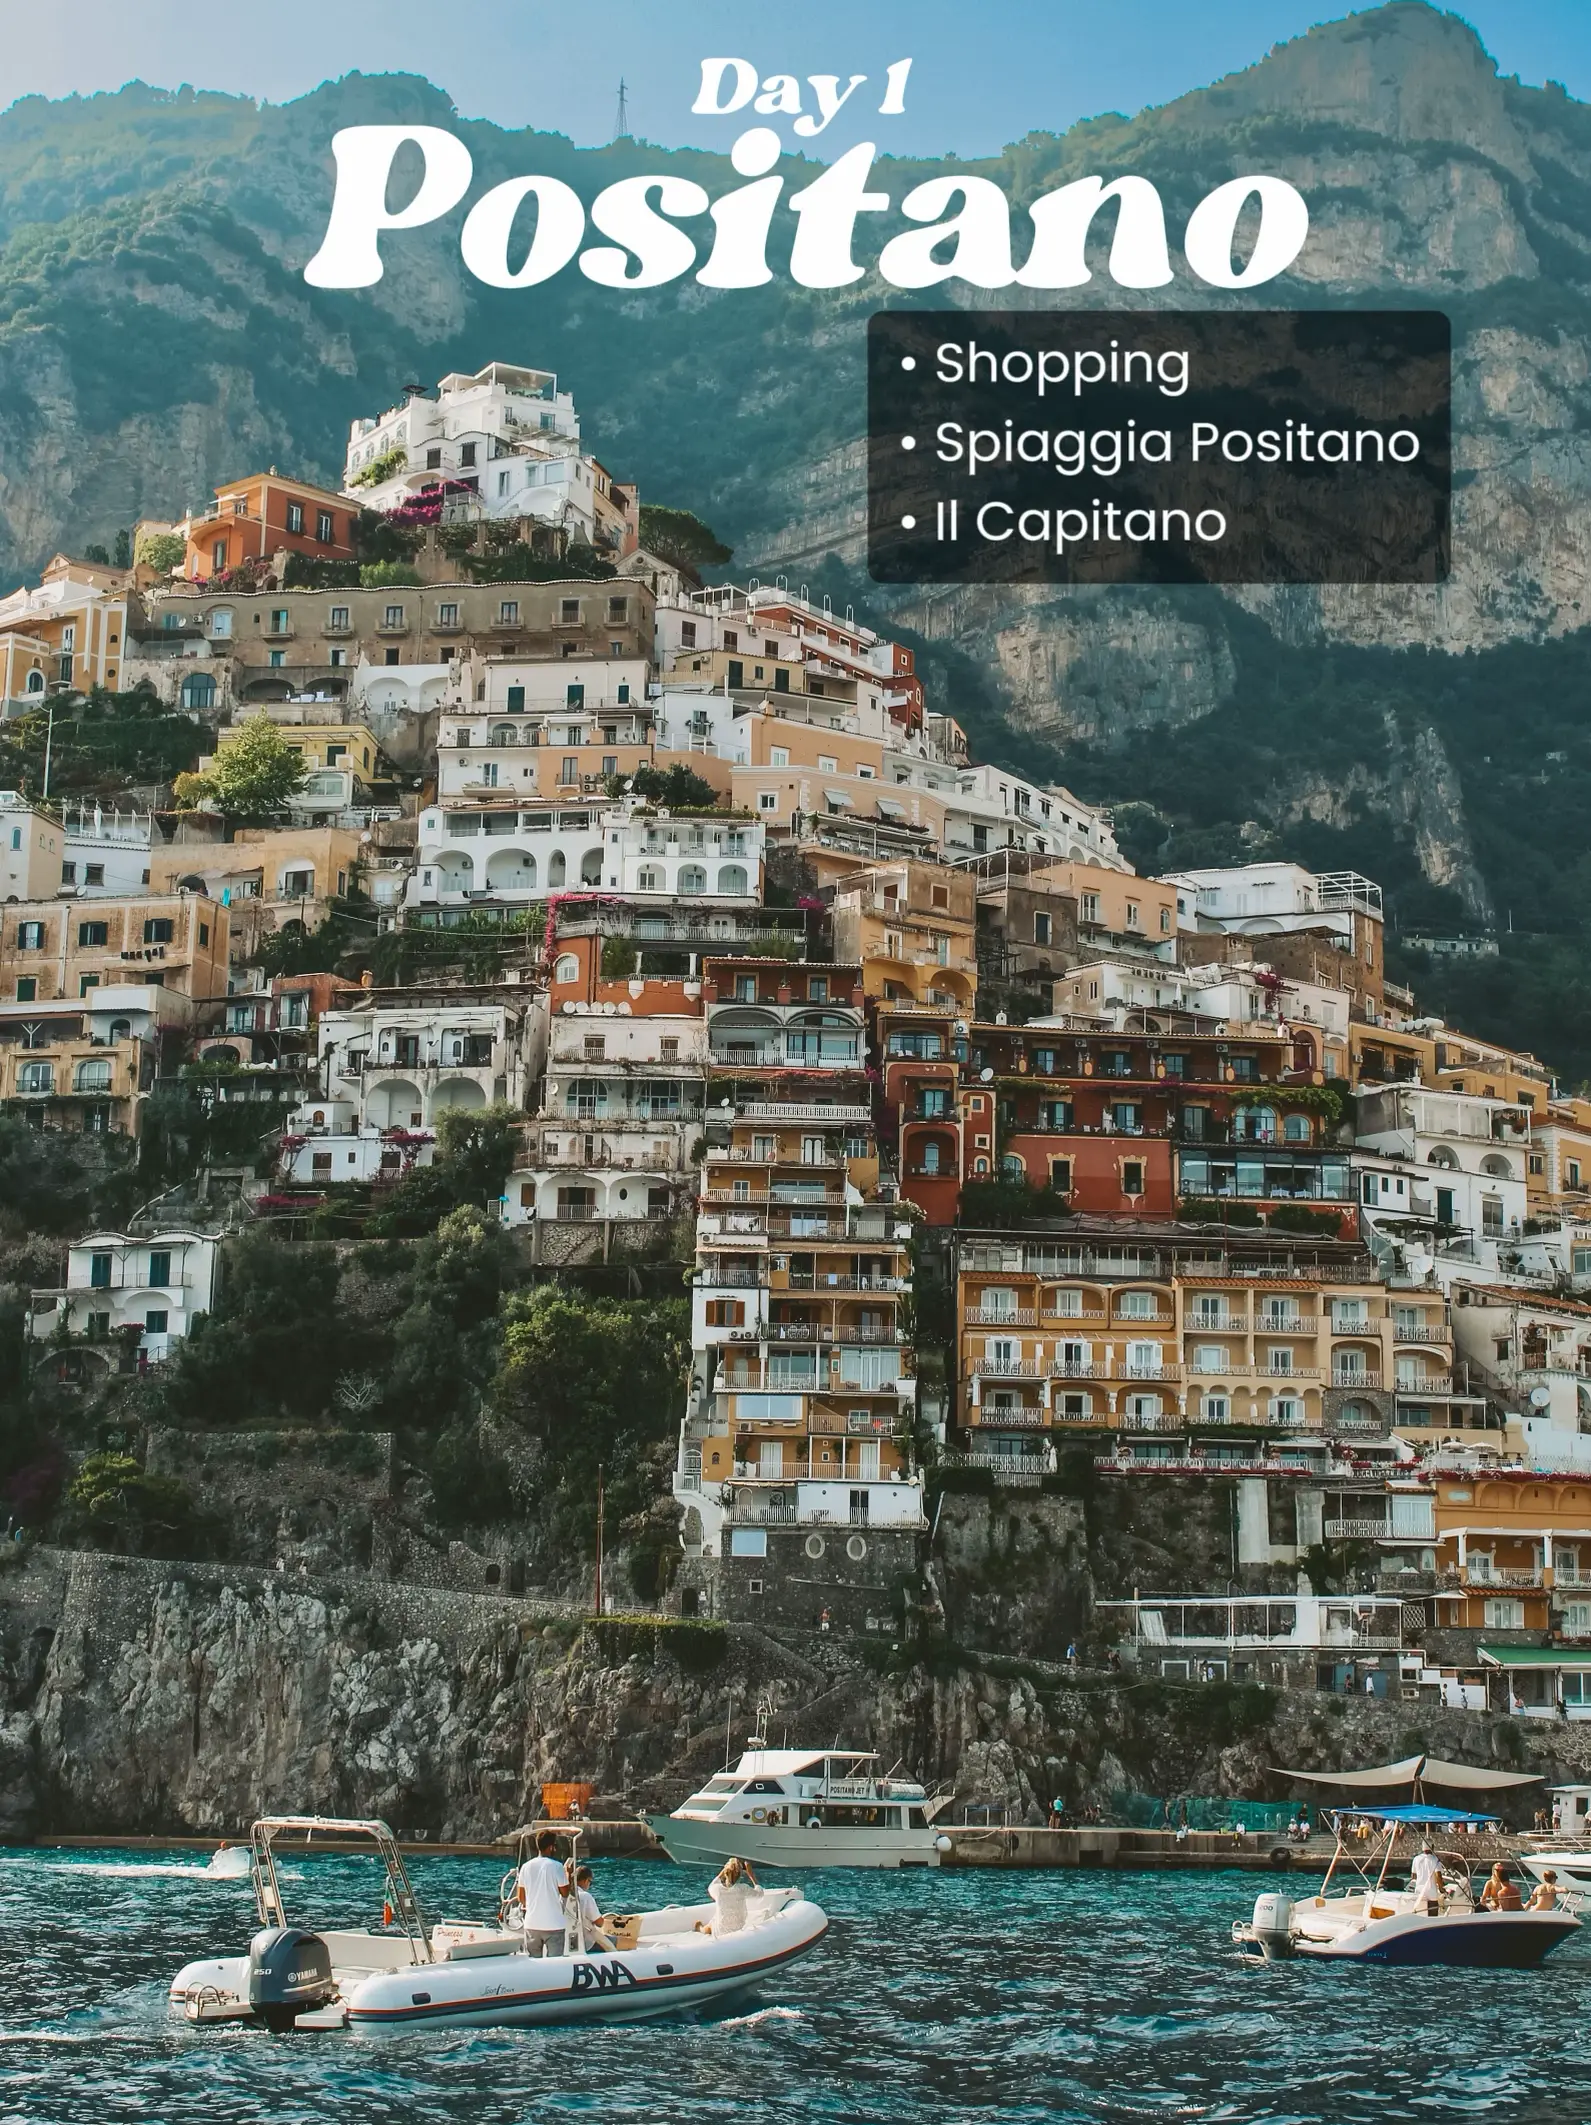 Positano, Italy - Oliver Guide